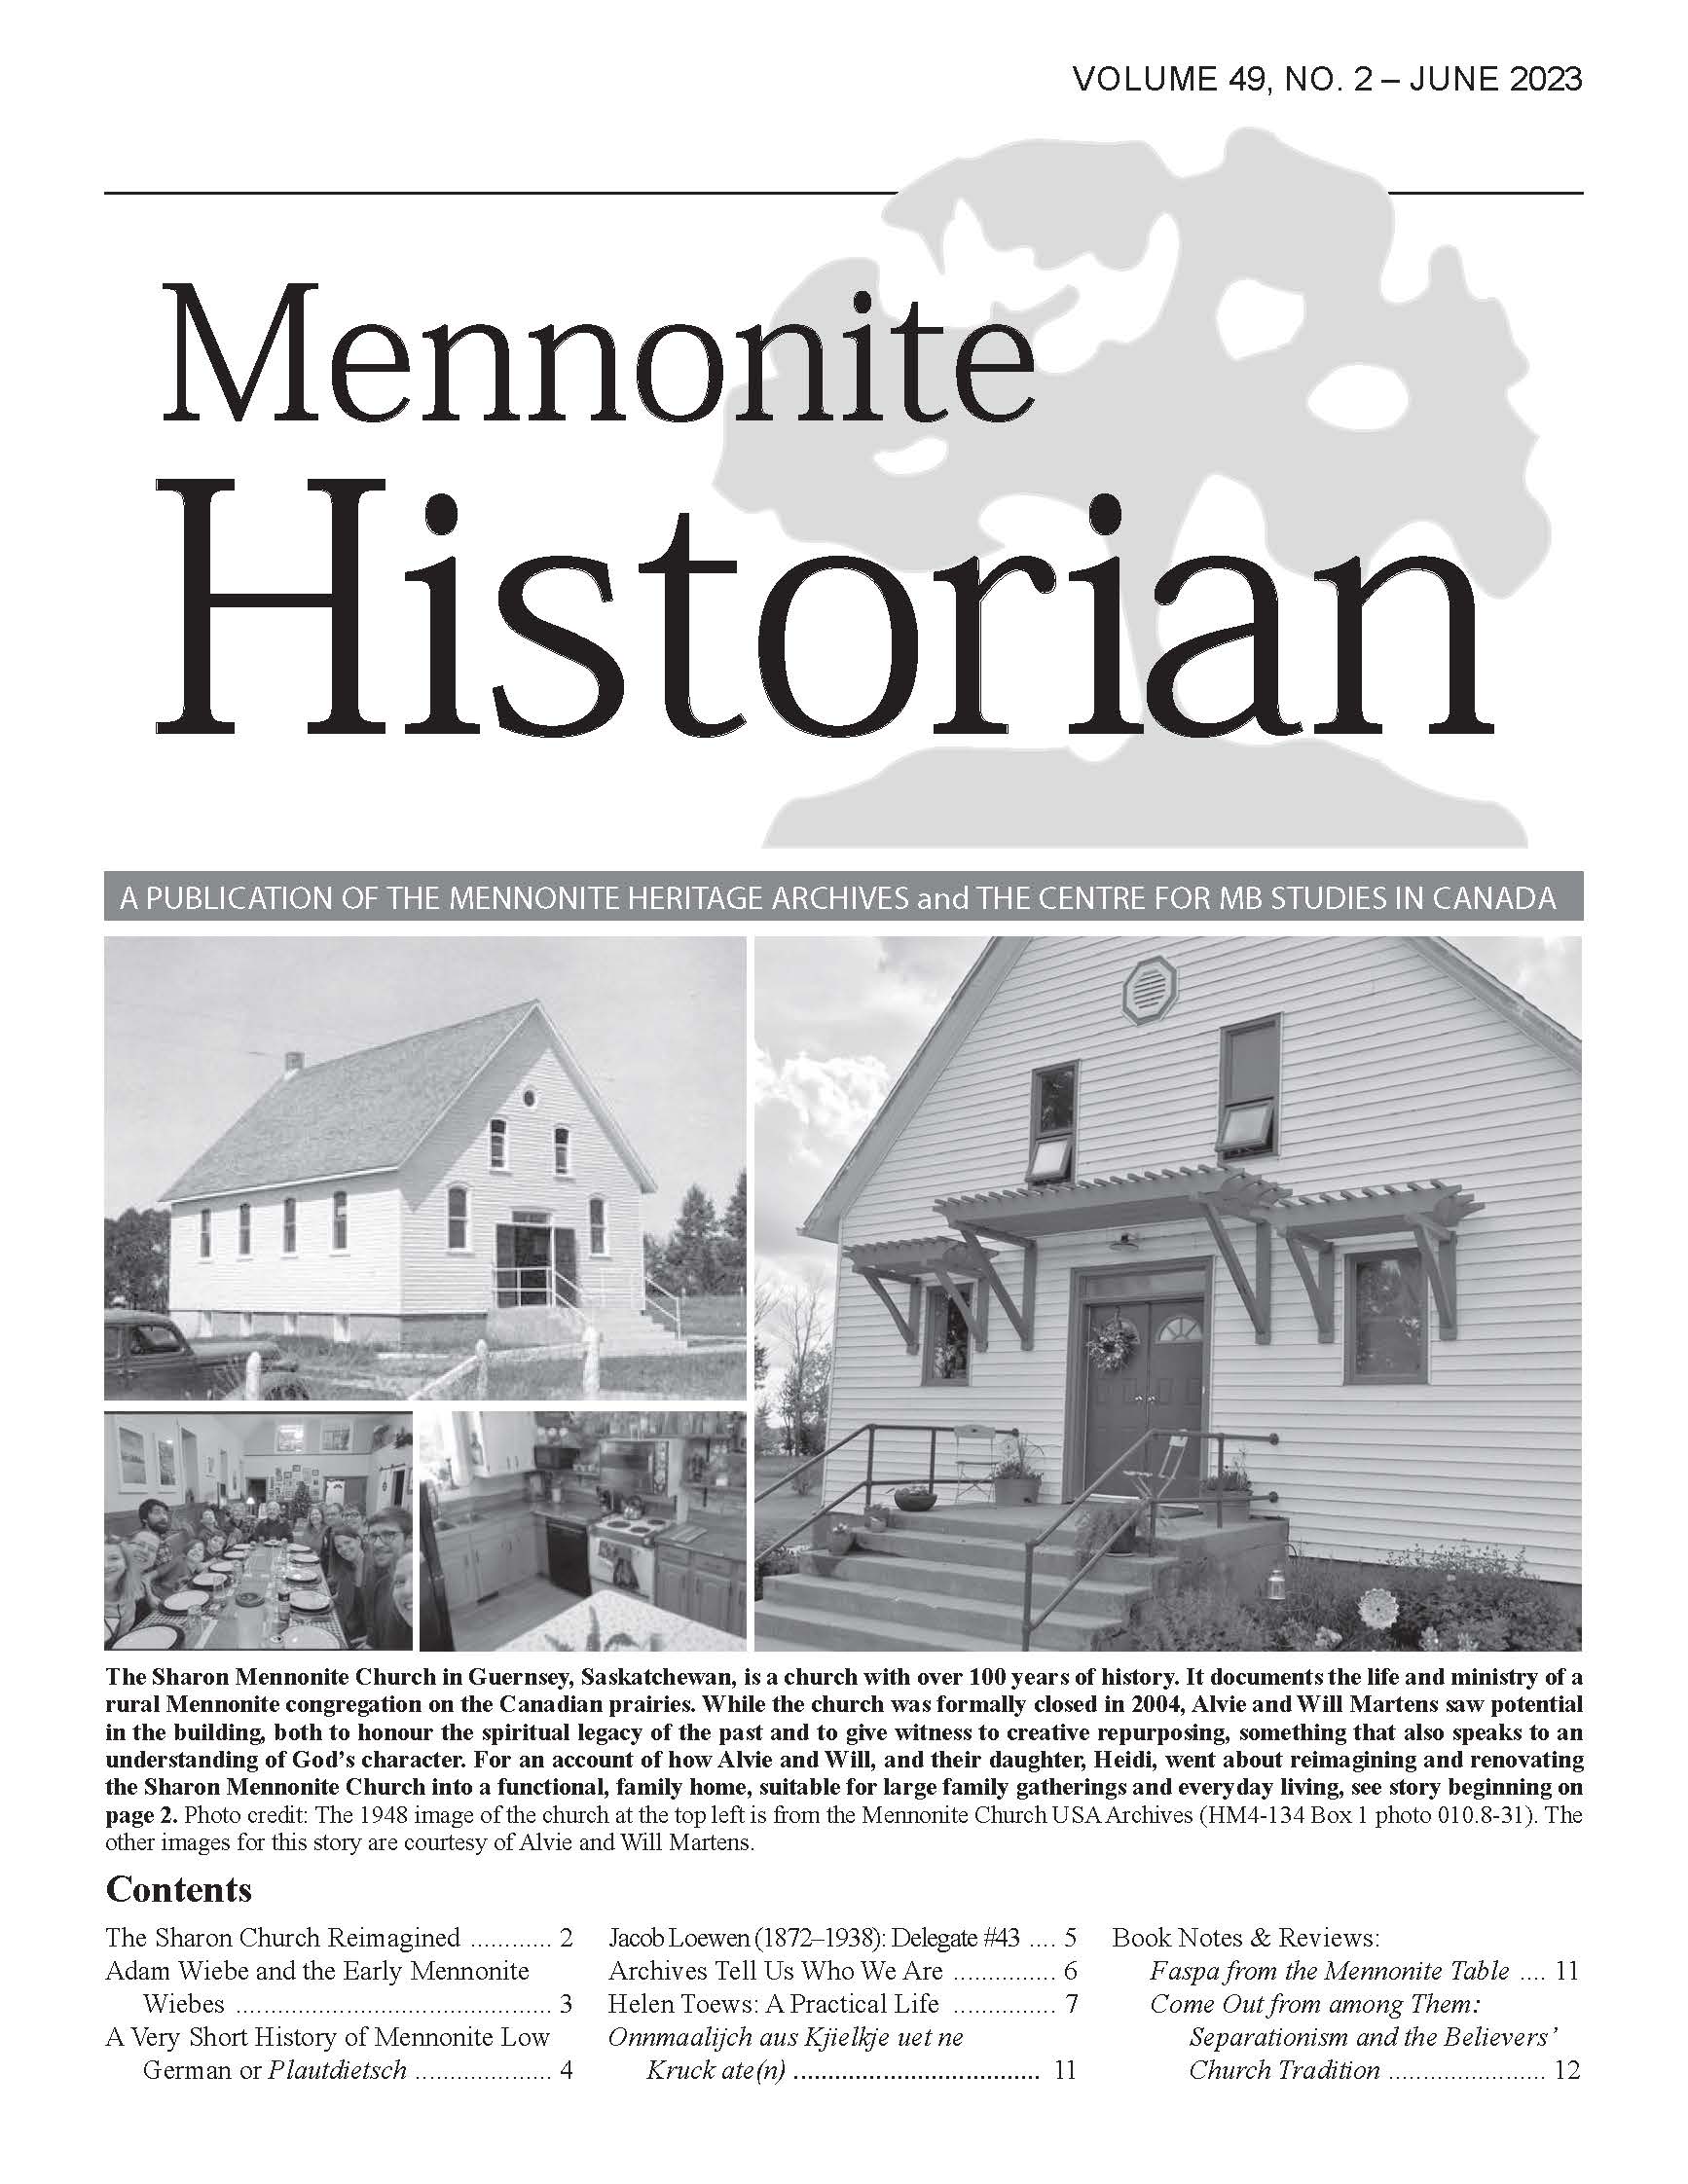 Mennonite Historian (June 2023)